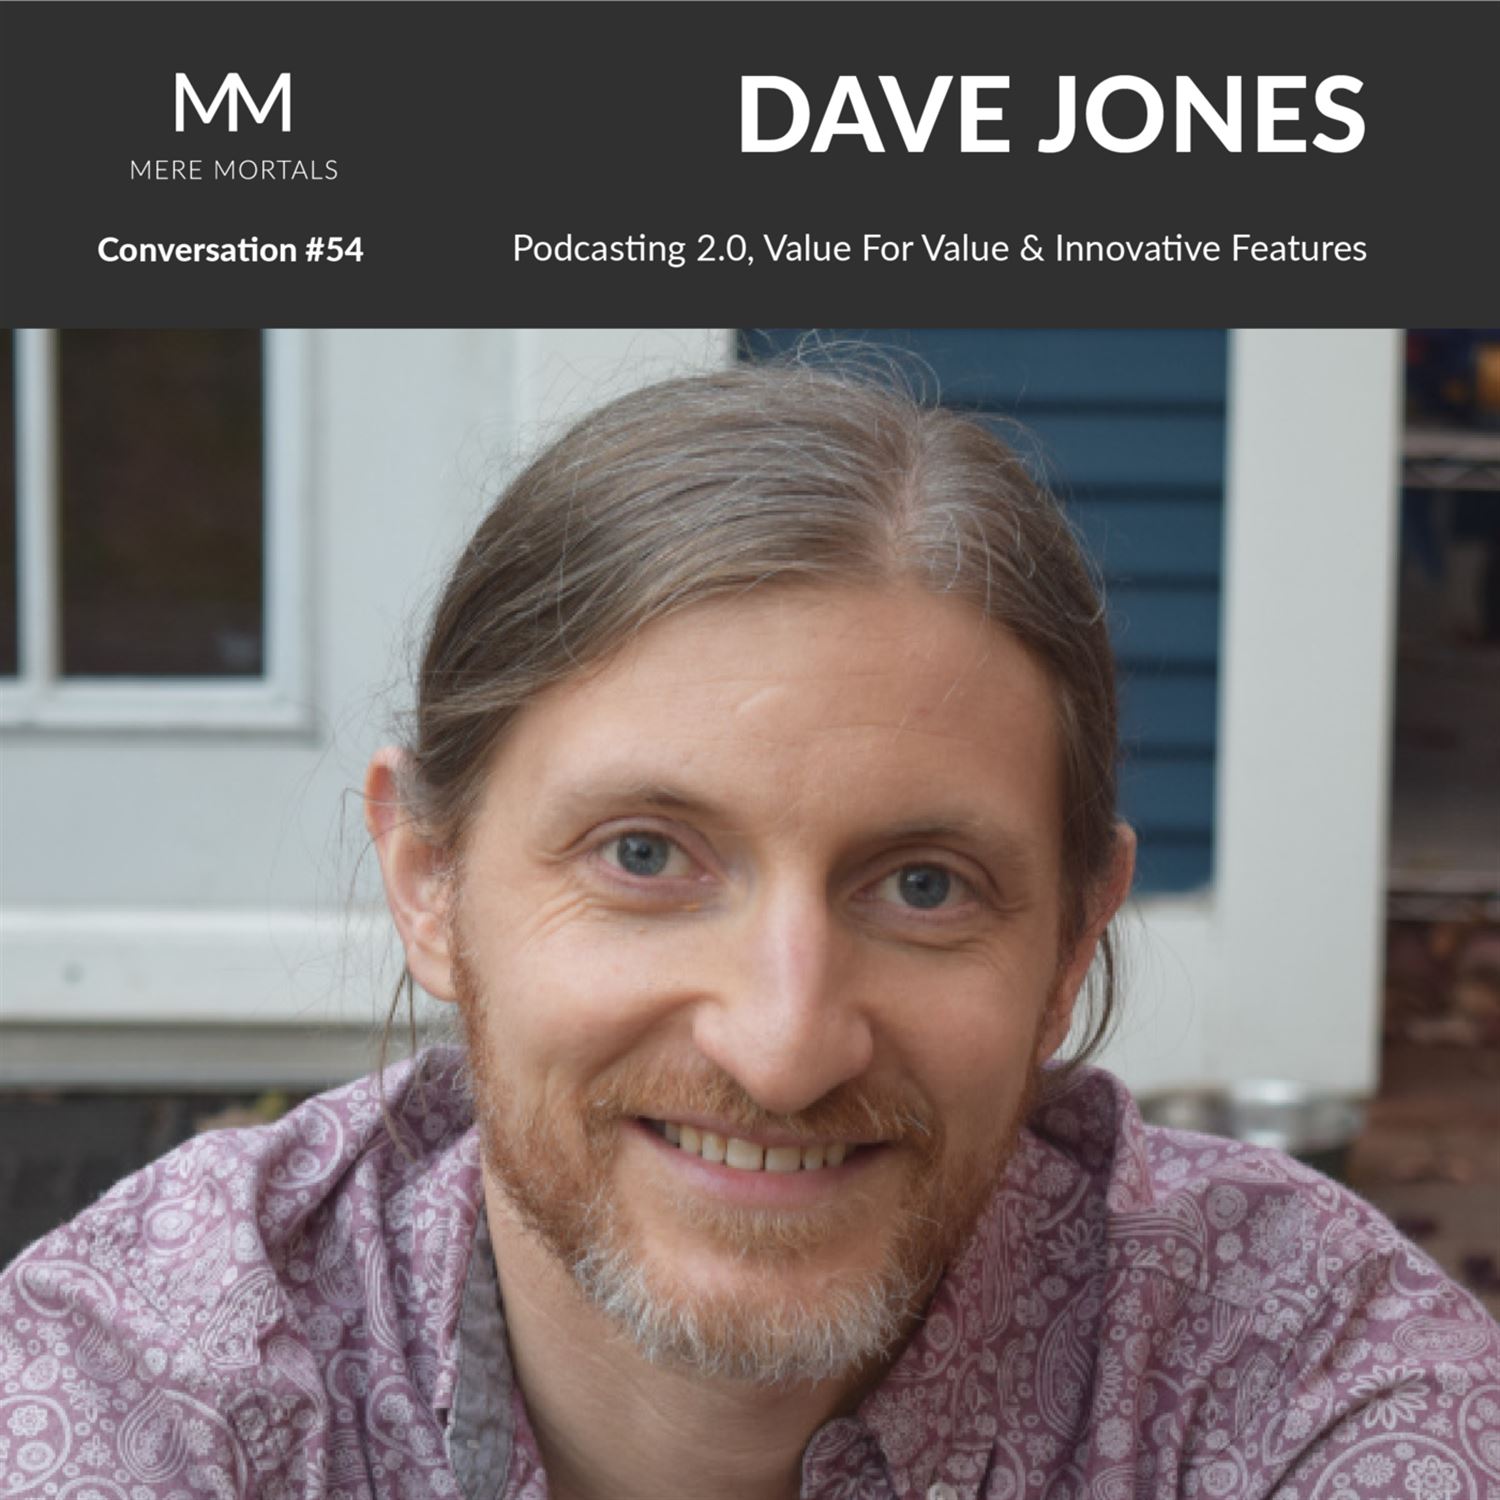 Dave Jones collaboration